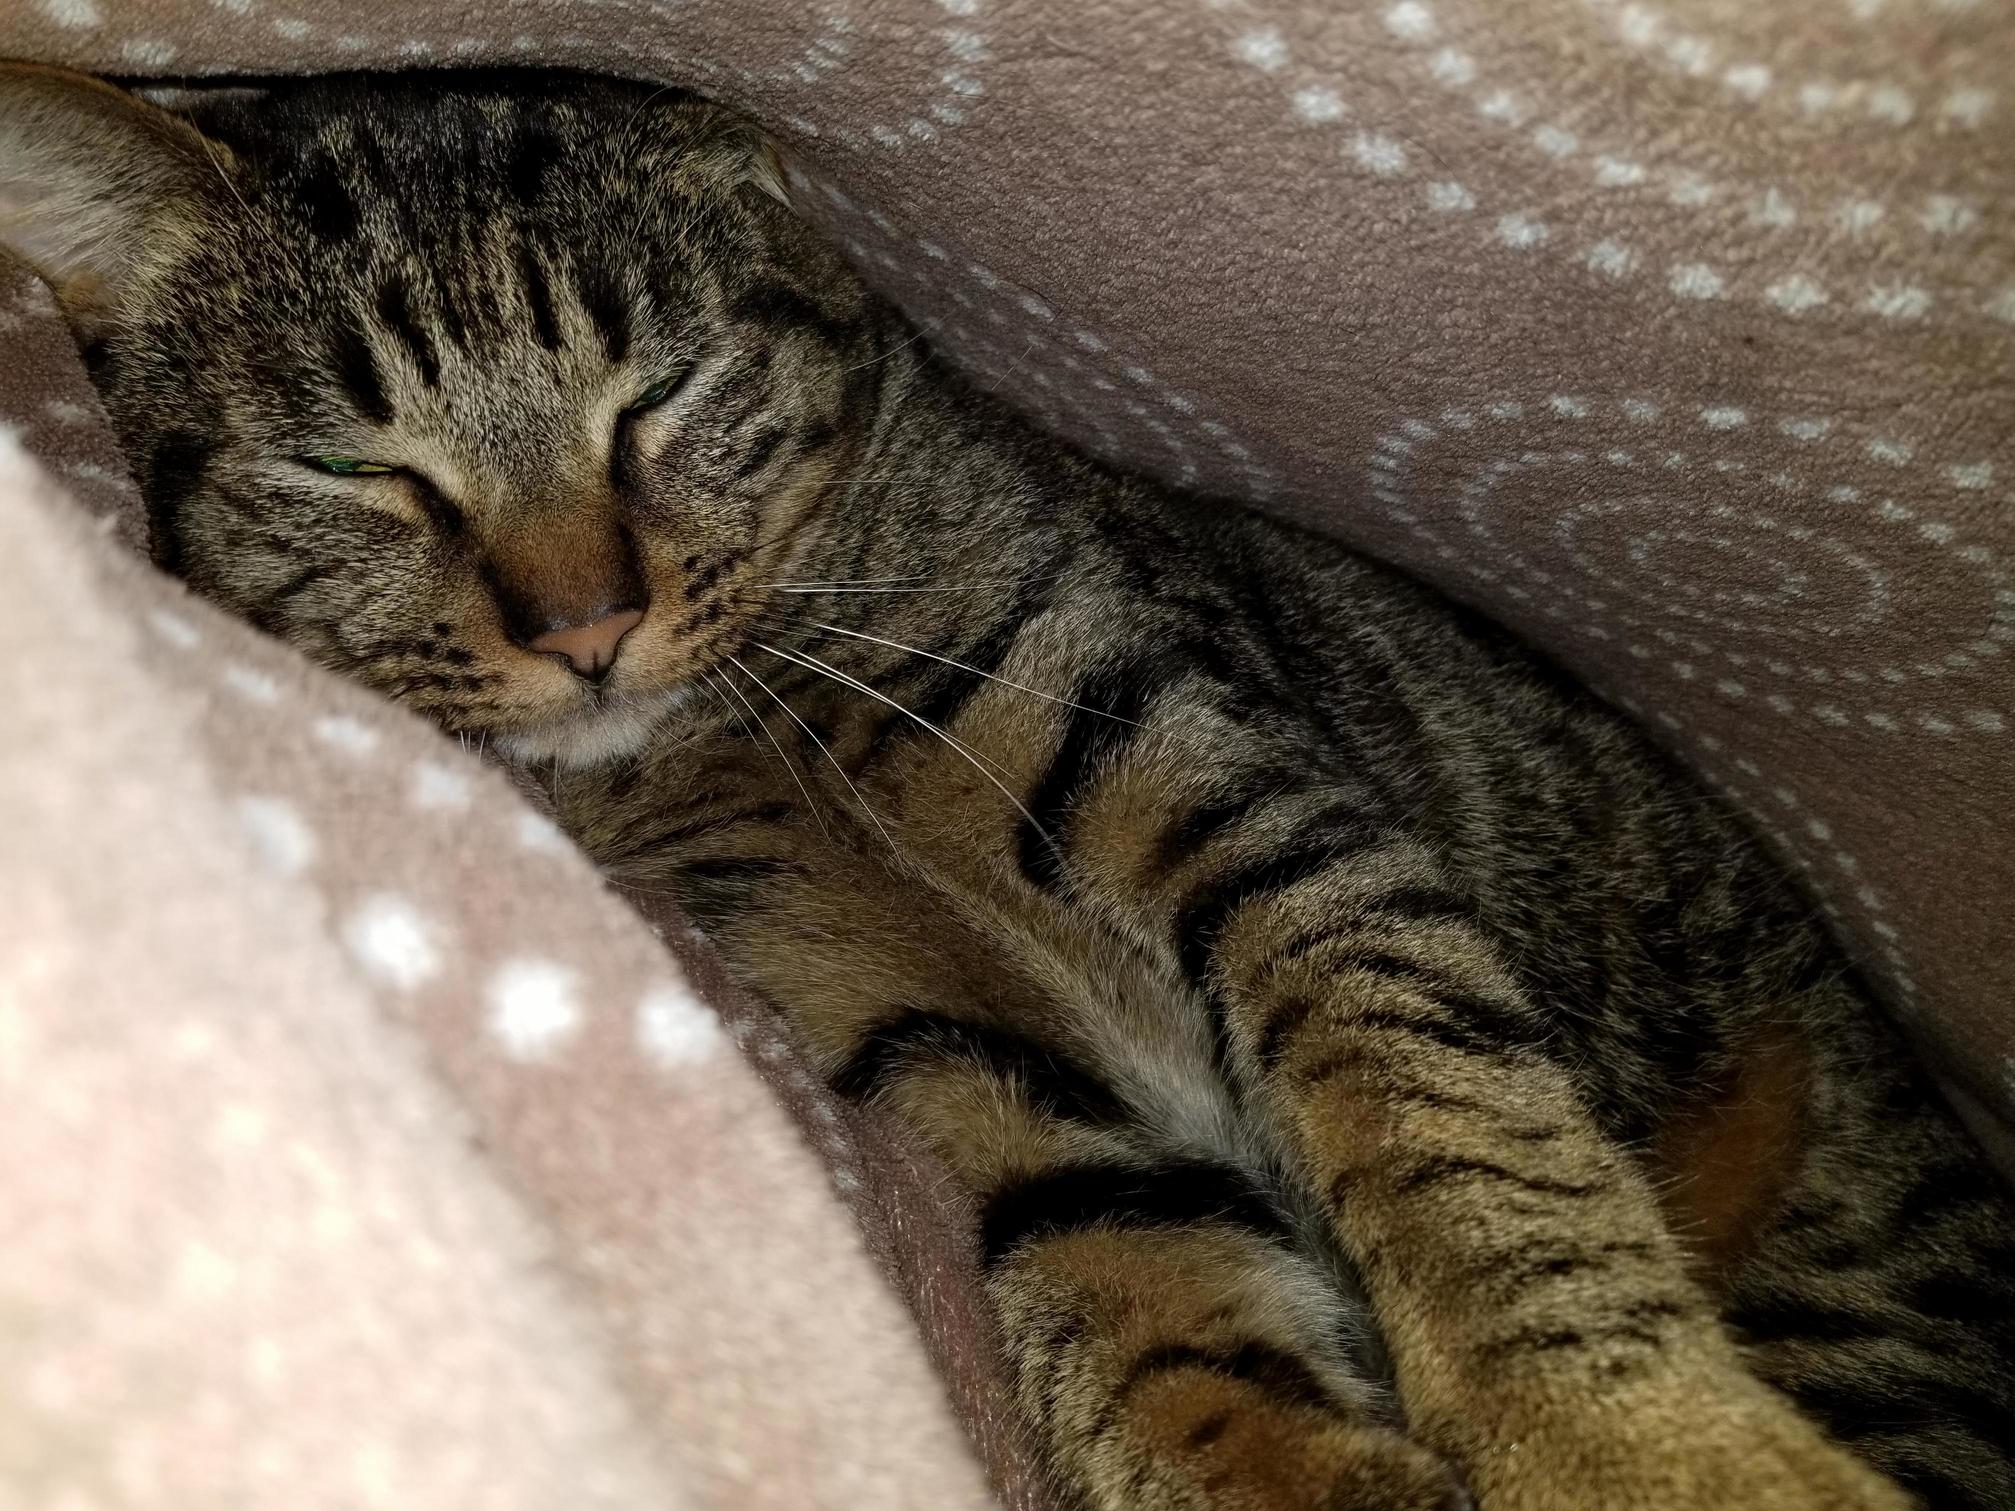 He fell asleep under the blankets 3